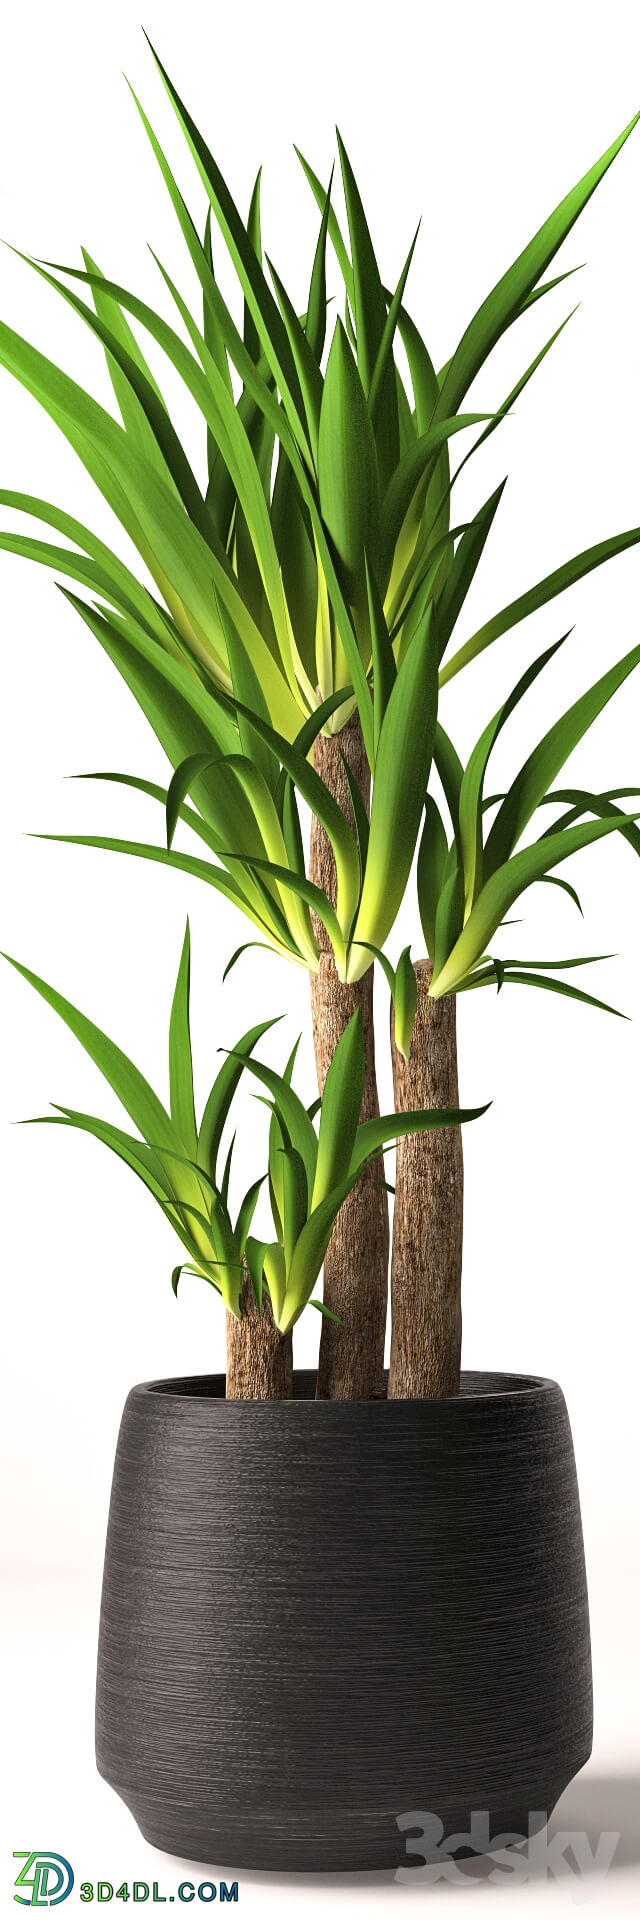 Plant - Yucca plant